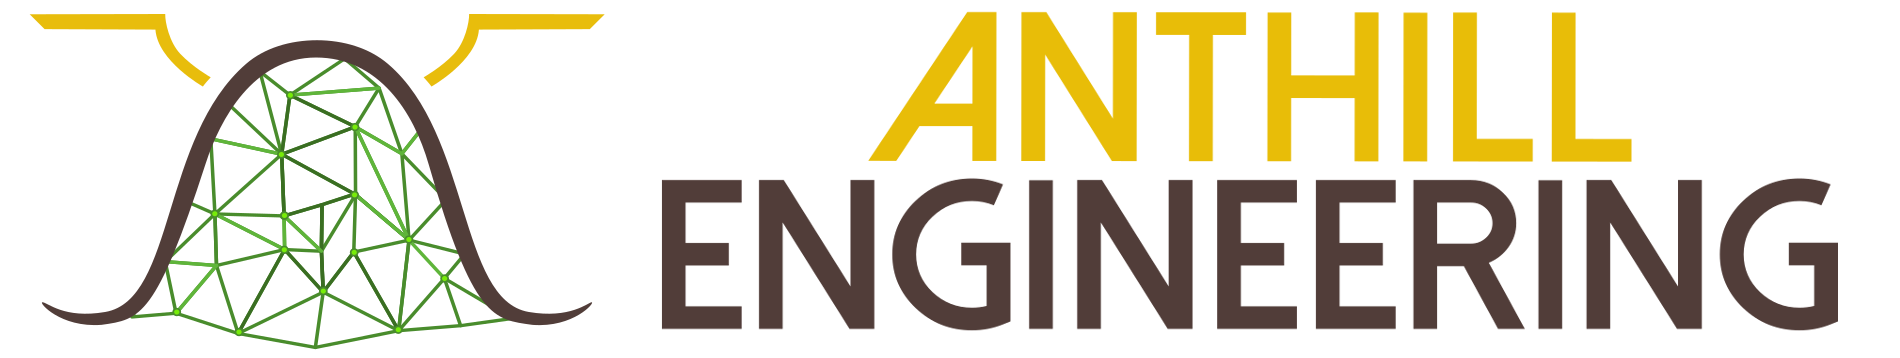 Anthill Engineering